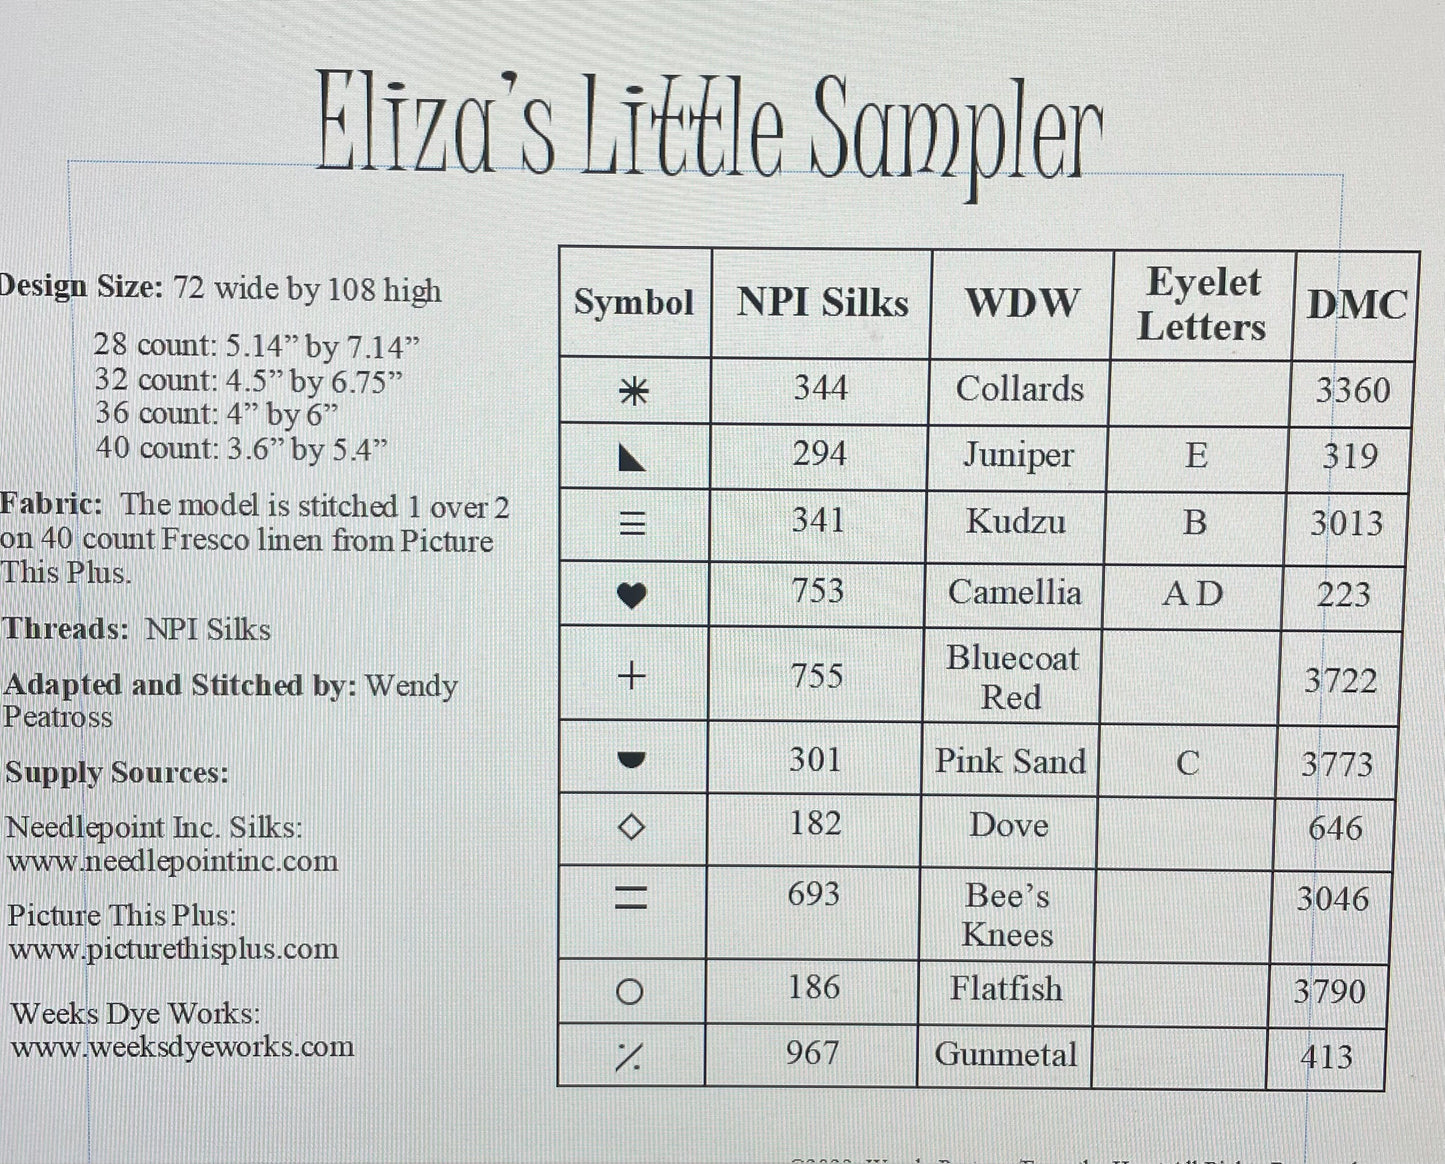 Eliza's Little Sampler - The Little Sampler Series #3- From the Heart Needleart, Needlecraft Patterns, Needlecraft Patterns, The Crafty Grimalkin - A Cross Stitch Store